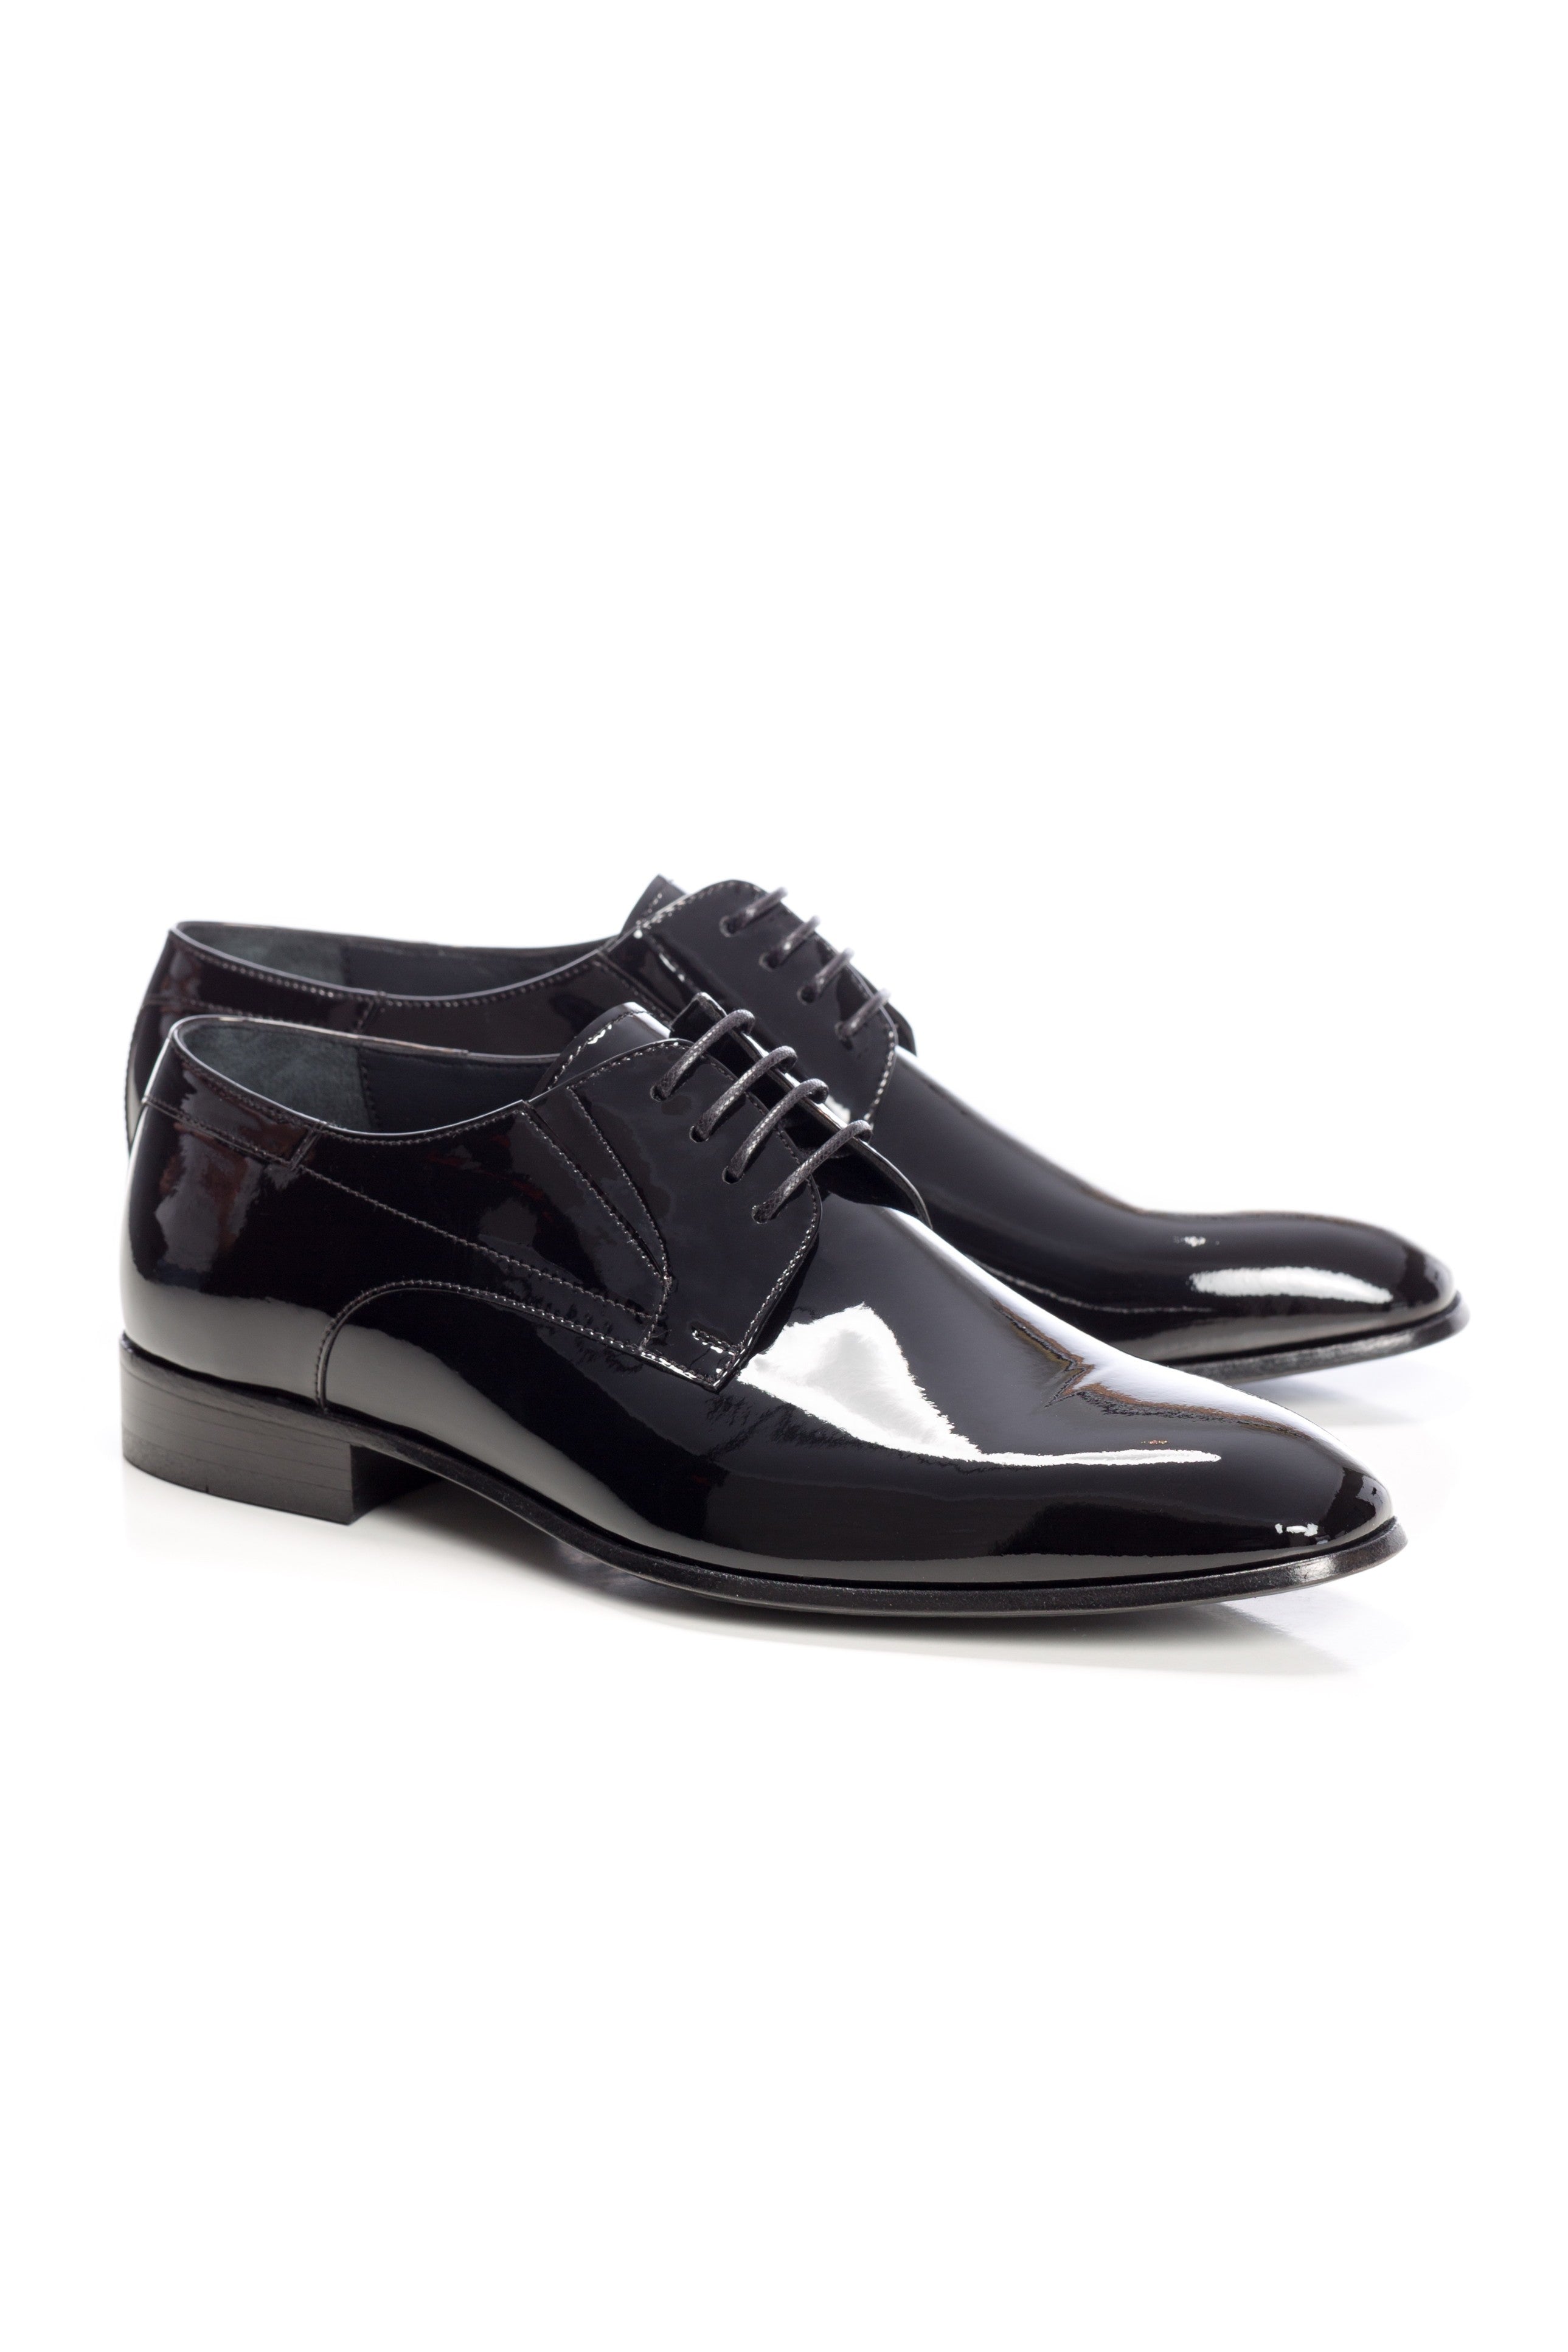 Black Patent Leather Tuxedo Shoes